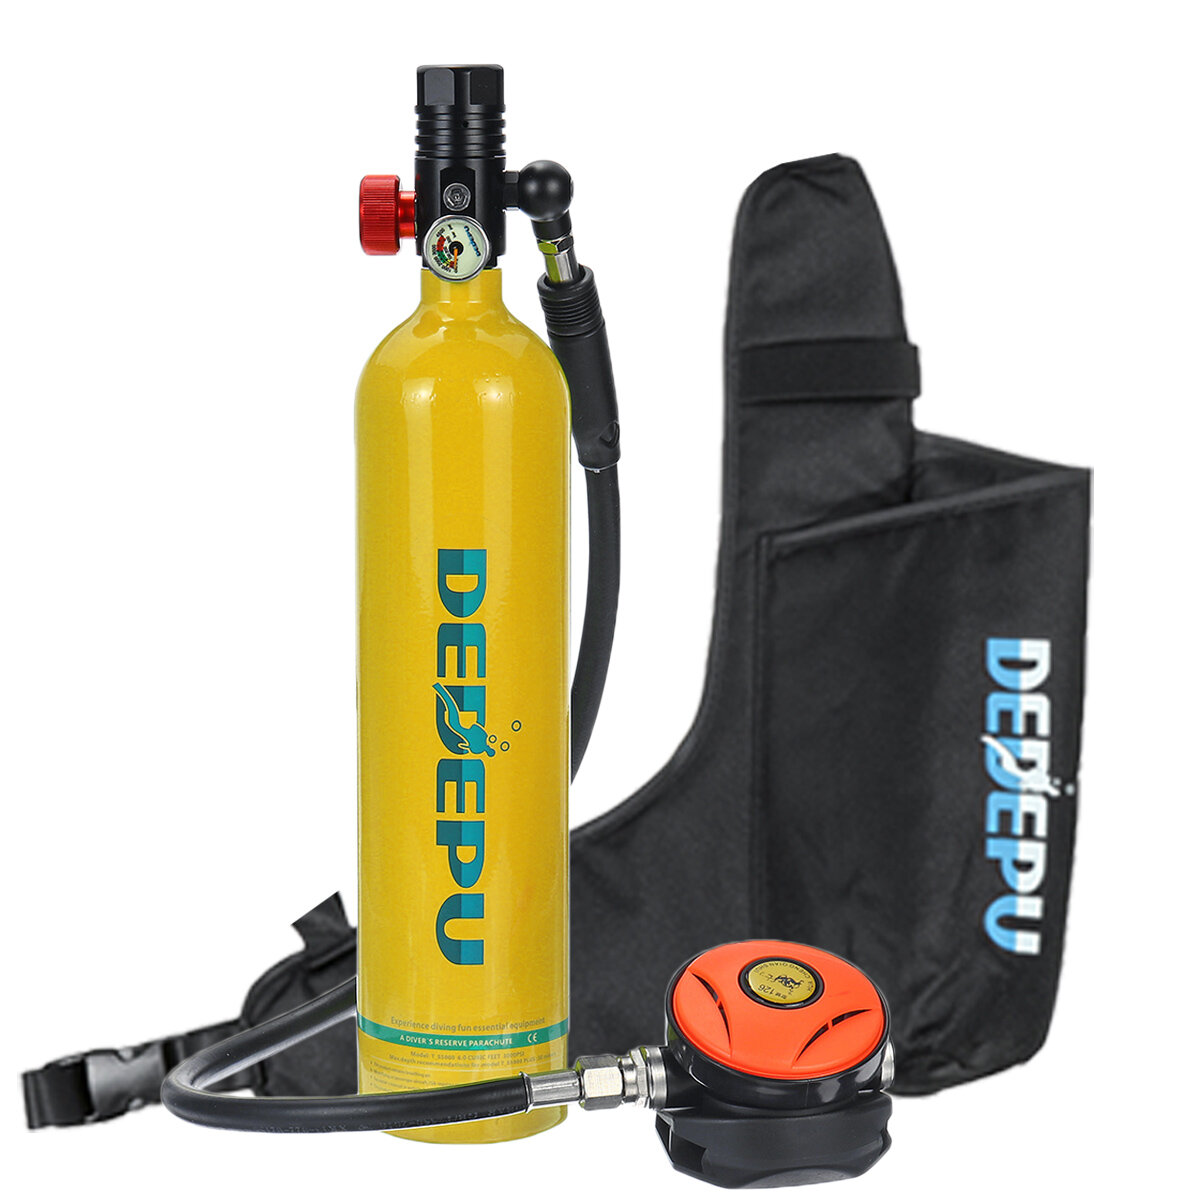 

DEDEPU Scuba Diving Set 1L Diving Tank With Breathing Valve+Storage Bag Underwater Mini Scuba Tank Accessories